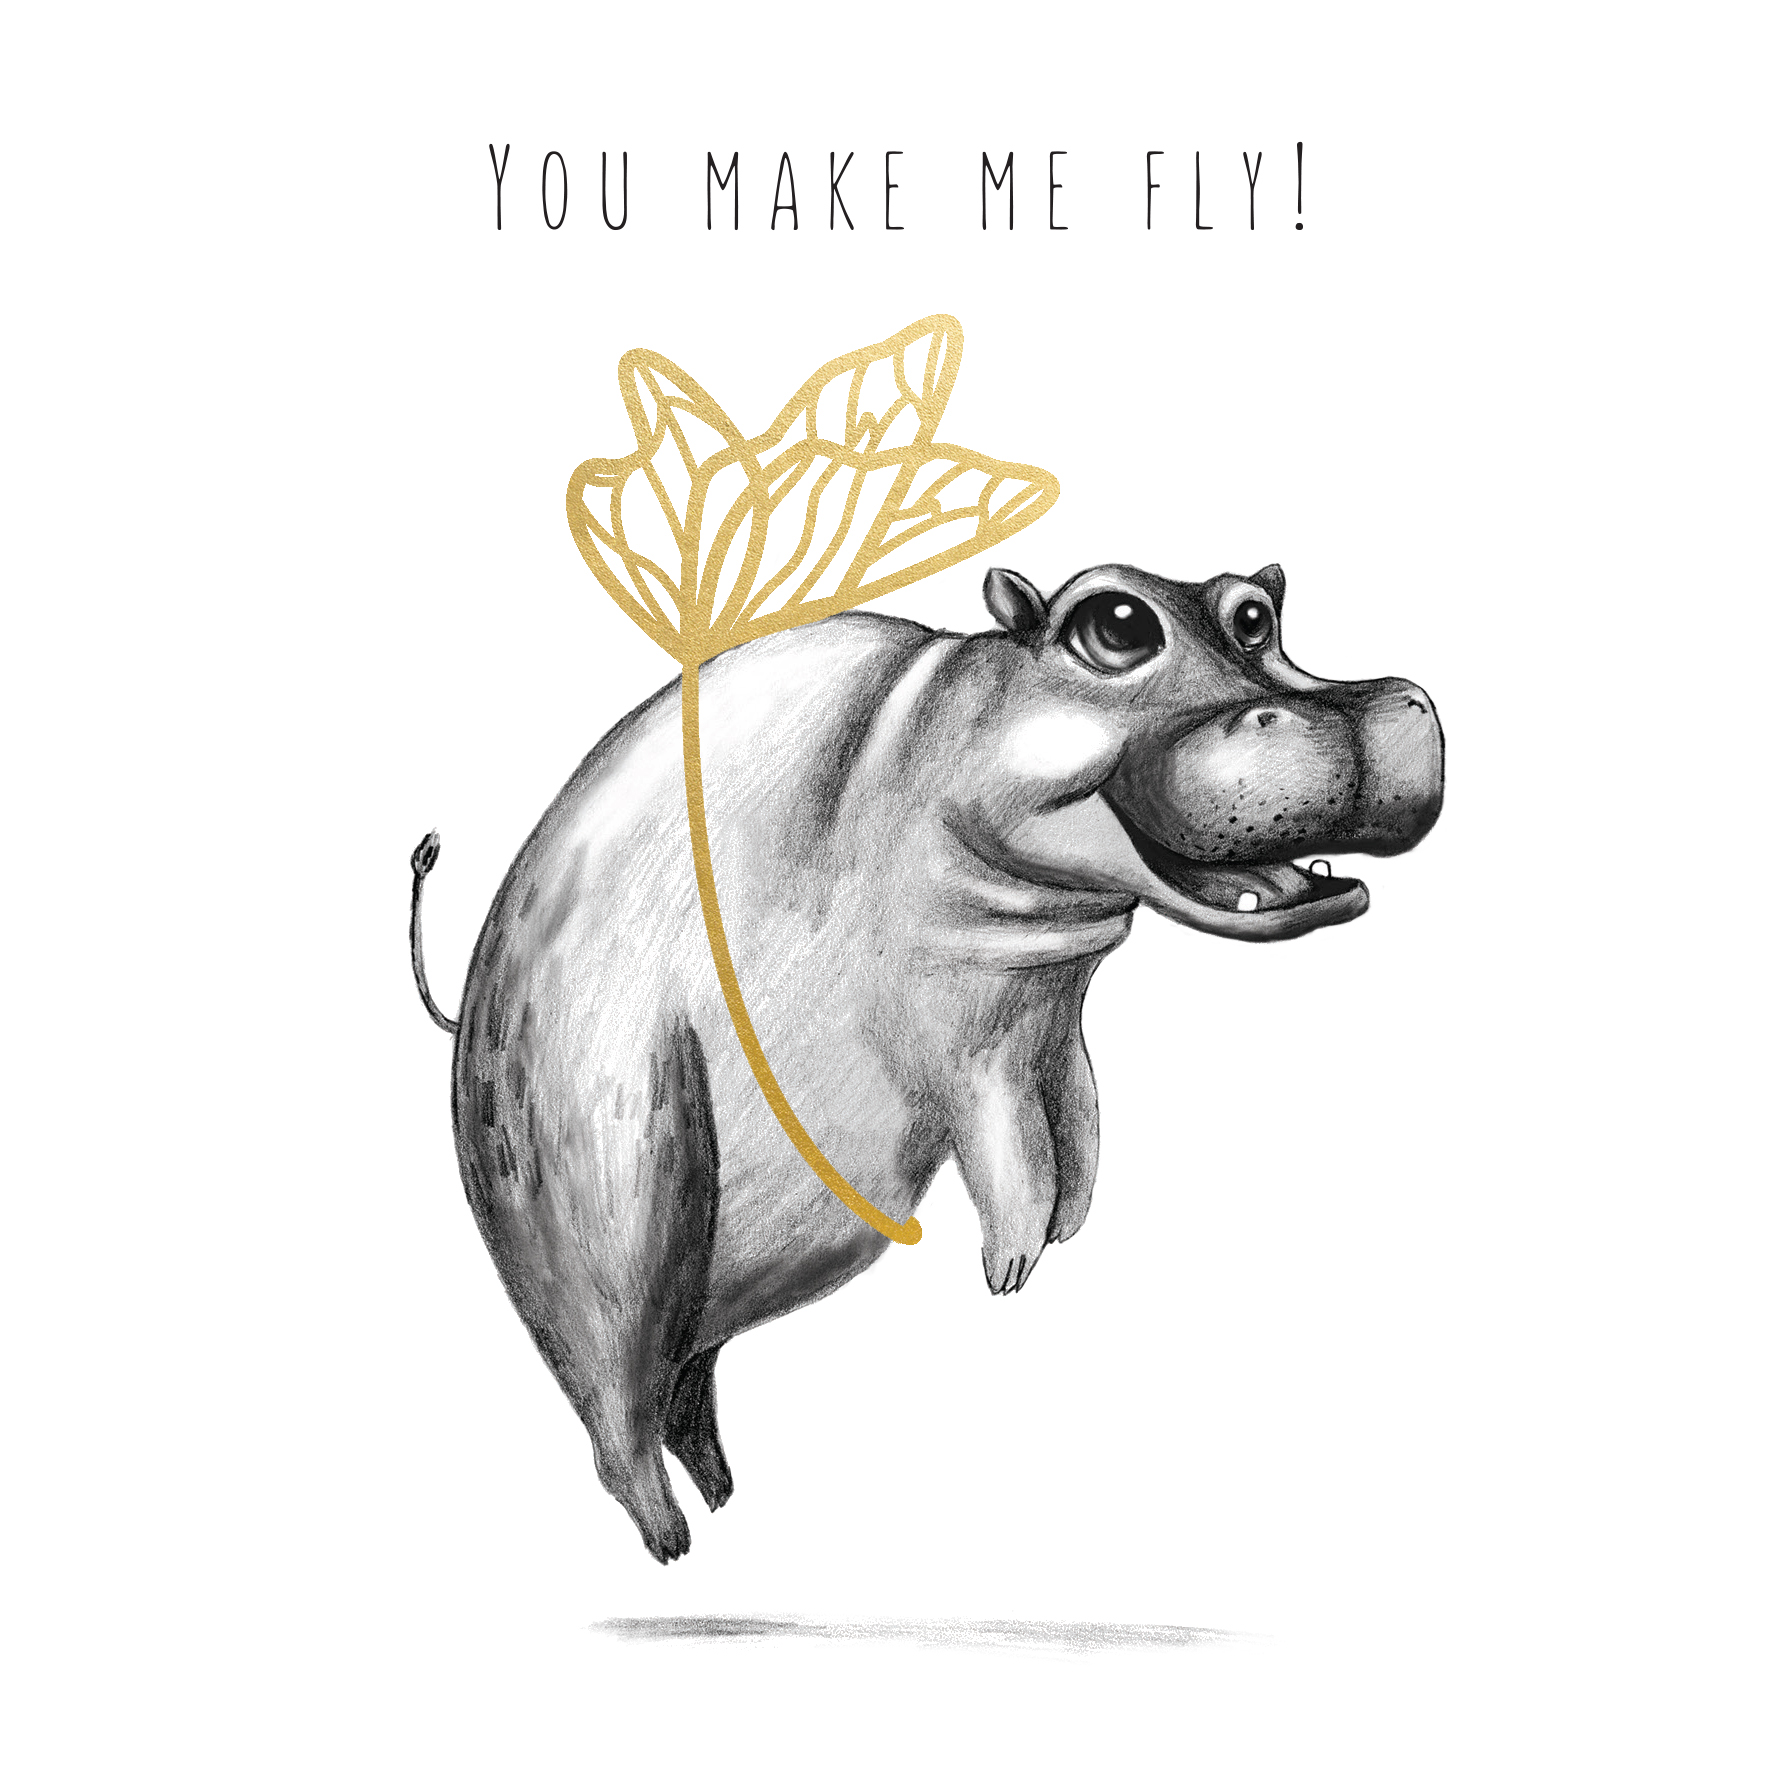 Flodhäst, Hippo - You make me fly!